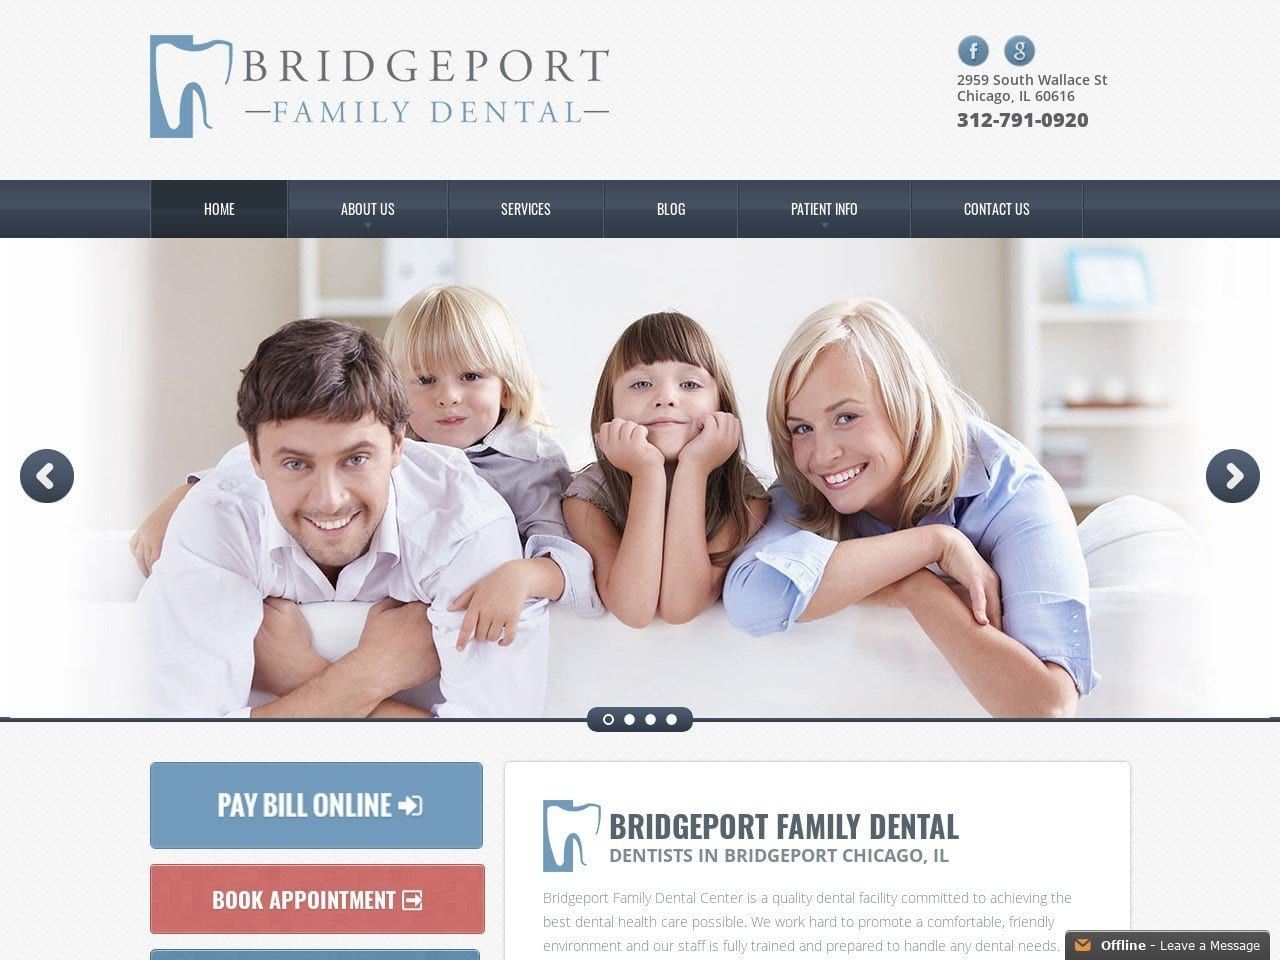 Bridgeport Family Dental Center Website Screenshot from bridgeportfamilydental.com